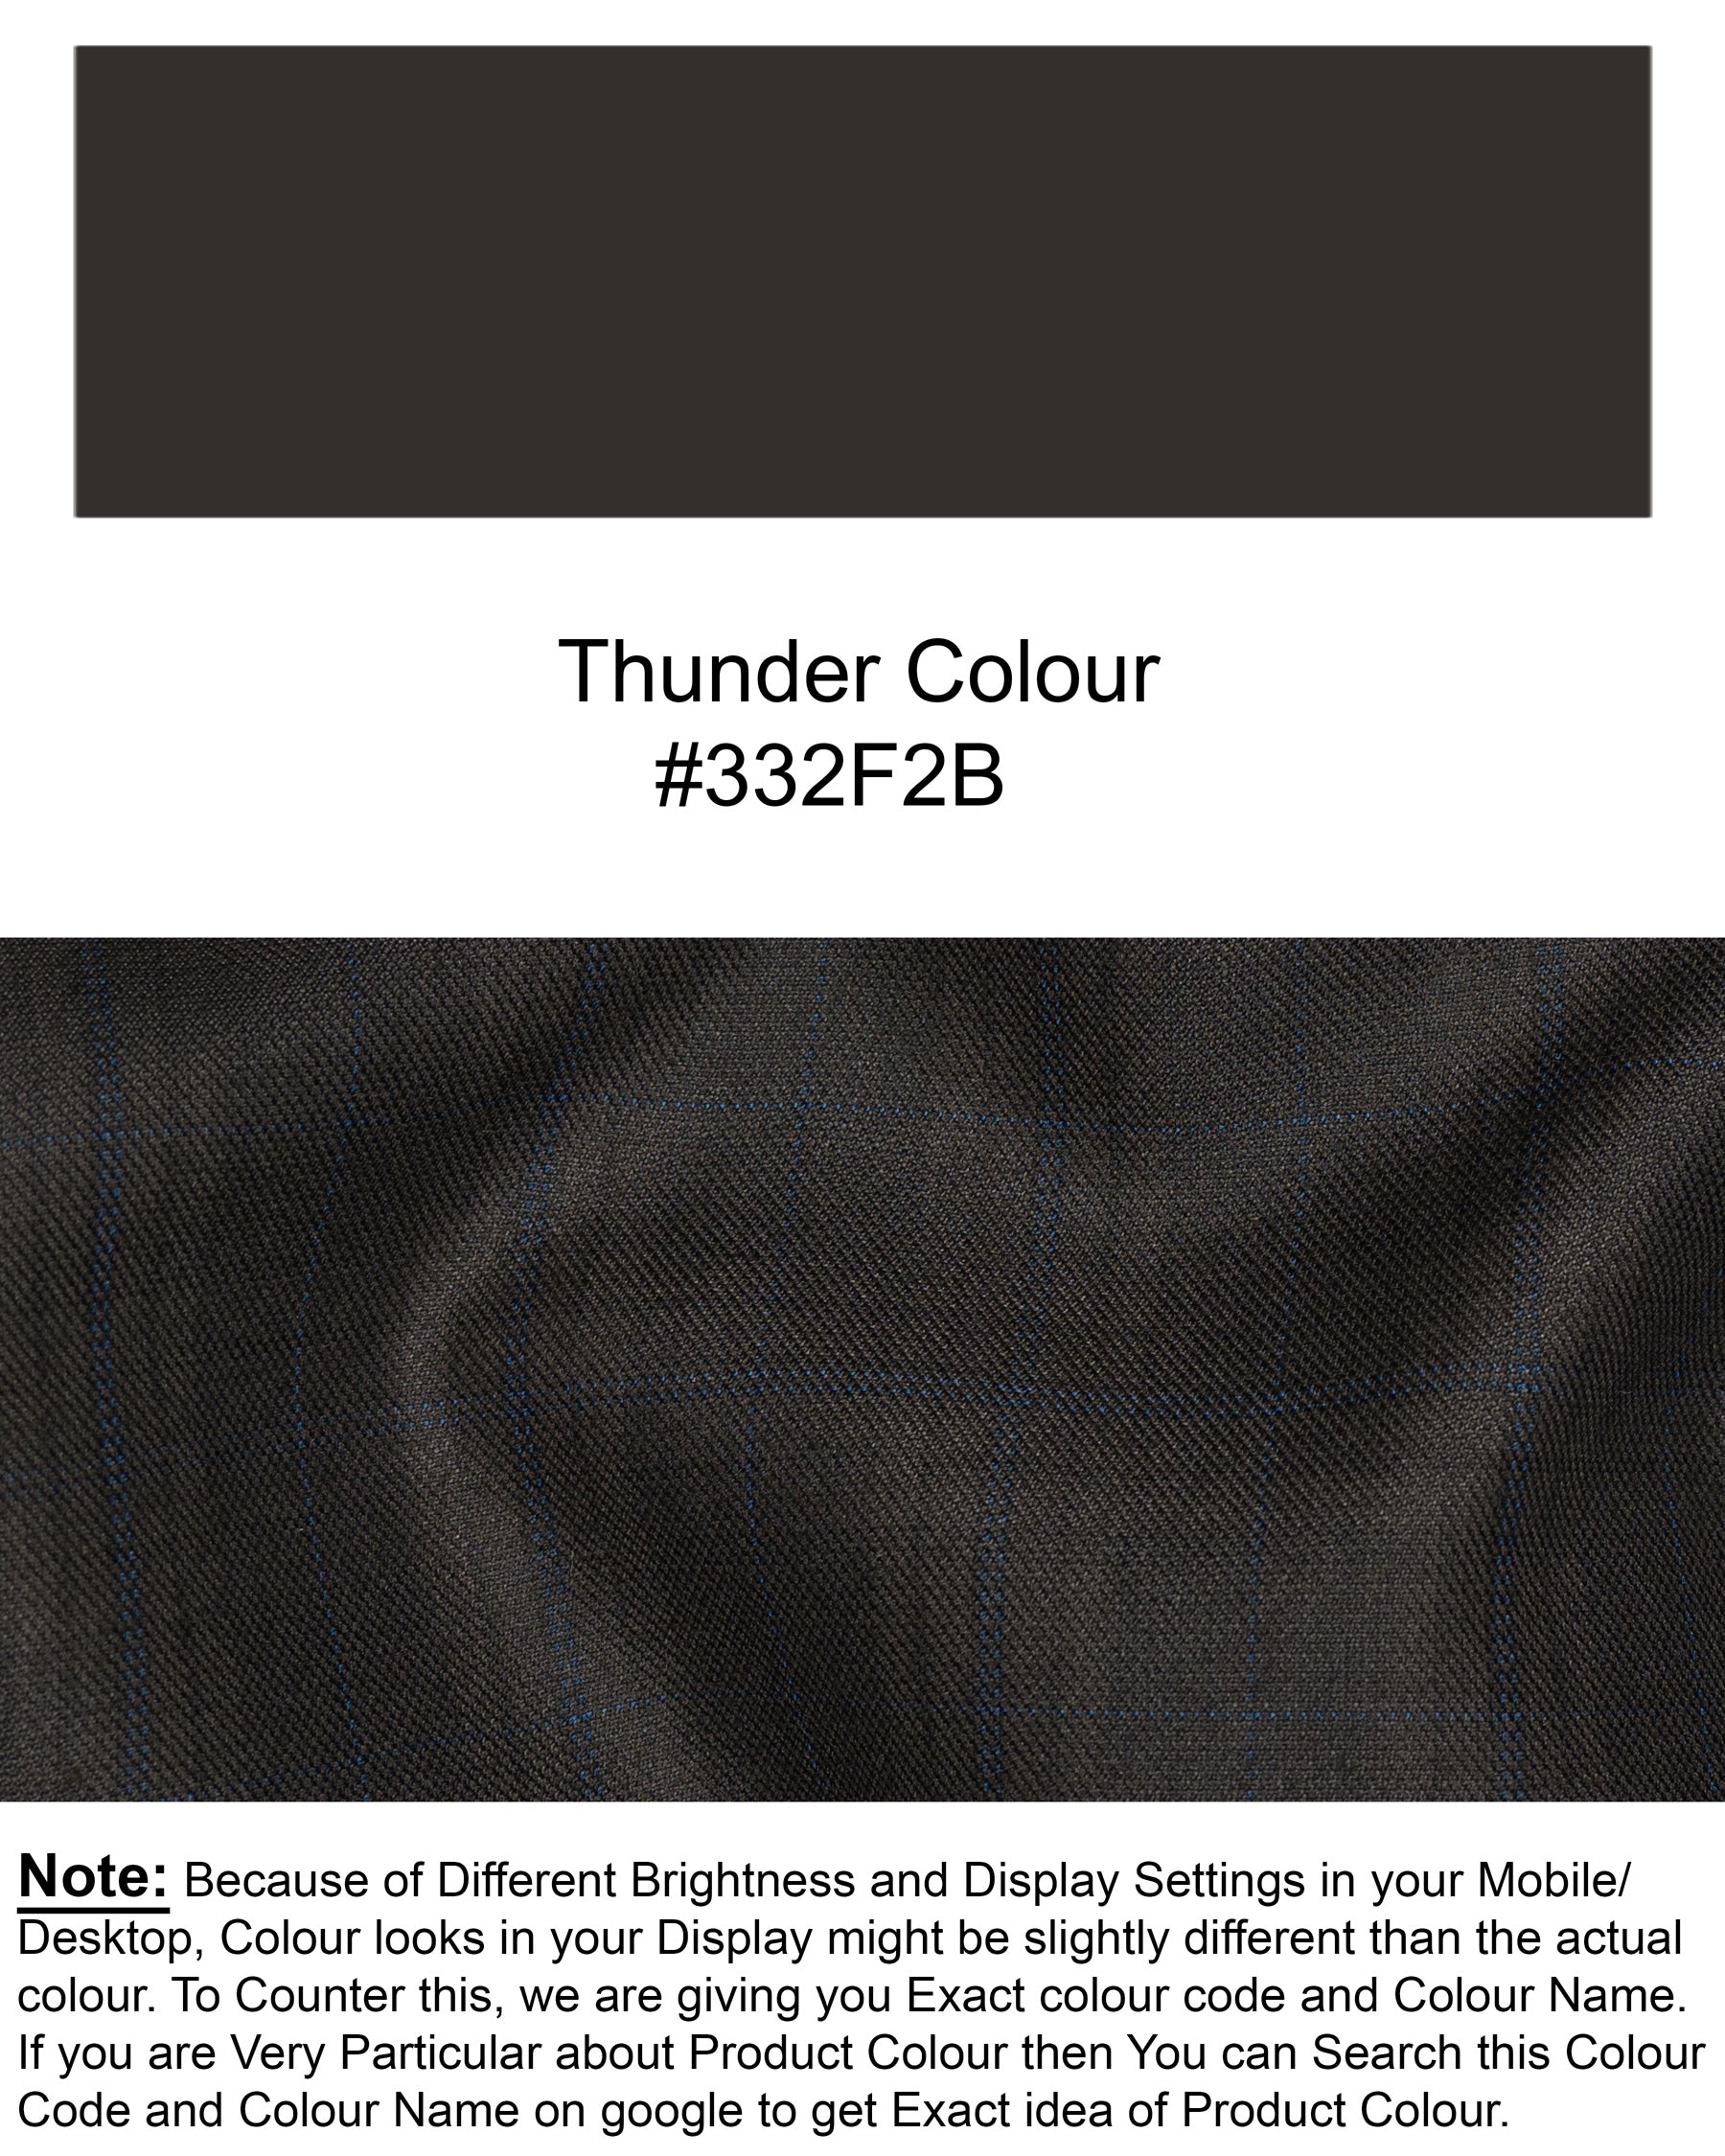 Thunder brown Plaid Wool Rich Waistcoat V1424-36, V1424-38, V1424-40, V1424-42, V1424-44, V1424-46, V1424-48, V1424-50, V1424-52, V1424-54, V1424-56, V1424-58, V1424-60